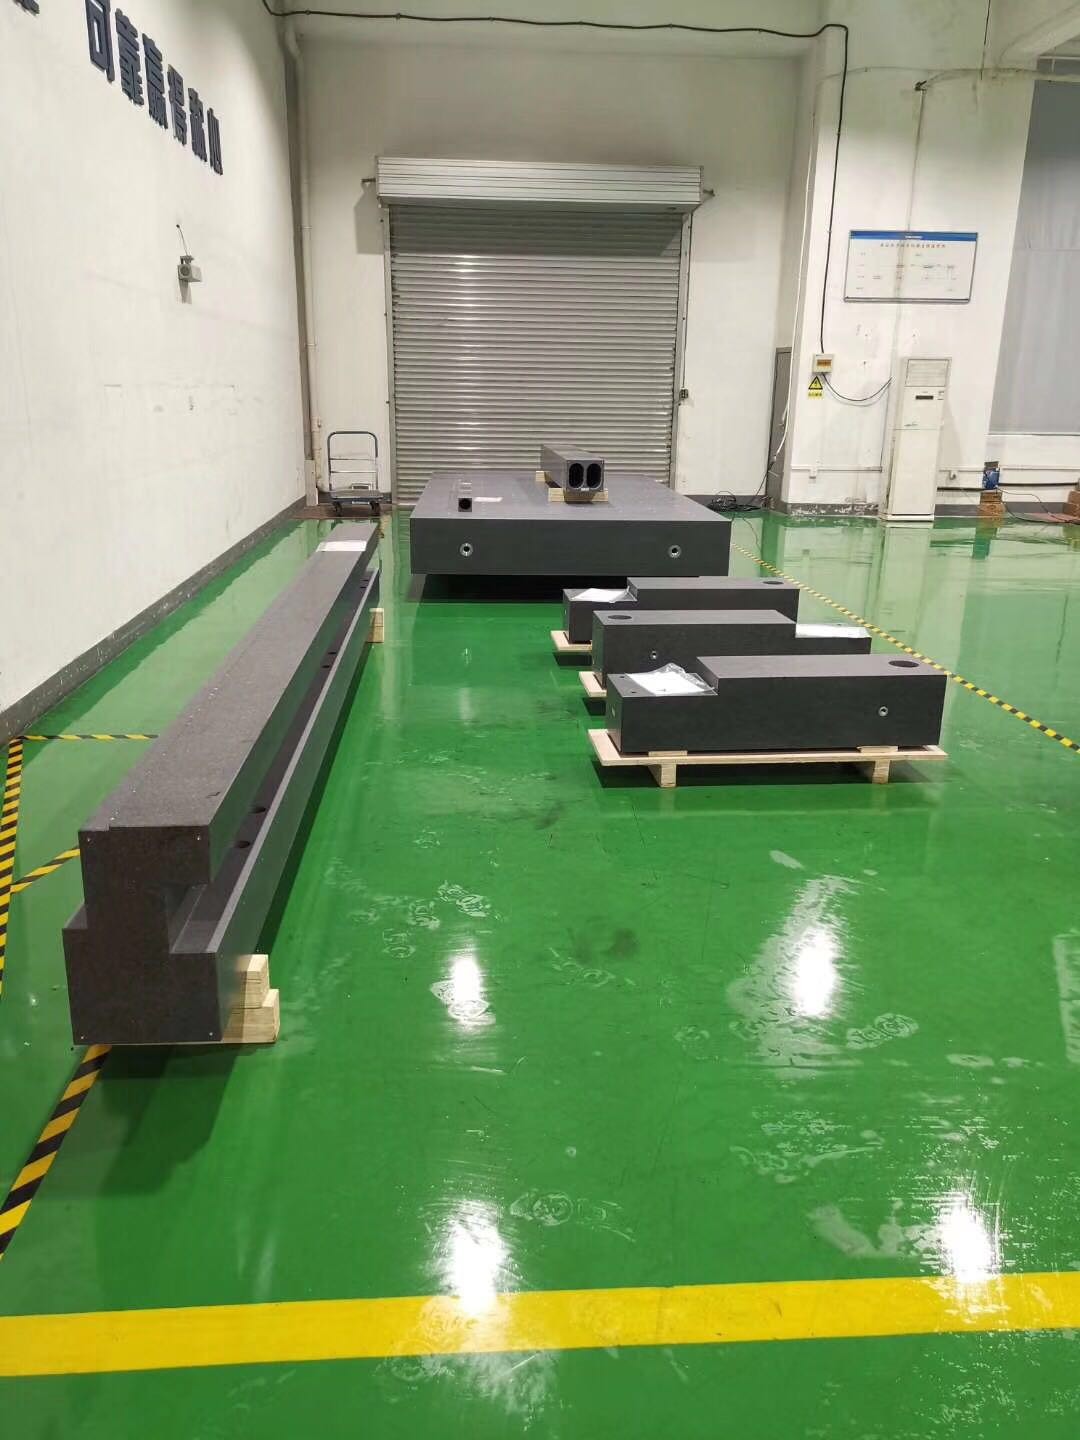 Jinanqing black granite surface table any size customerzied